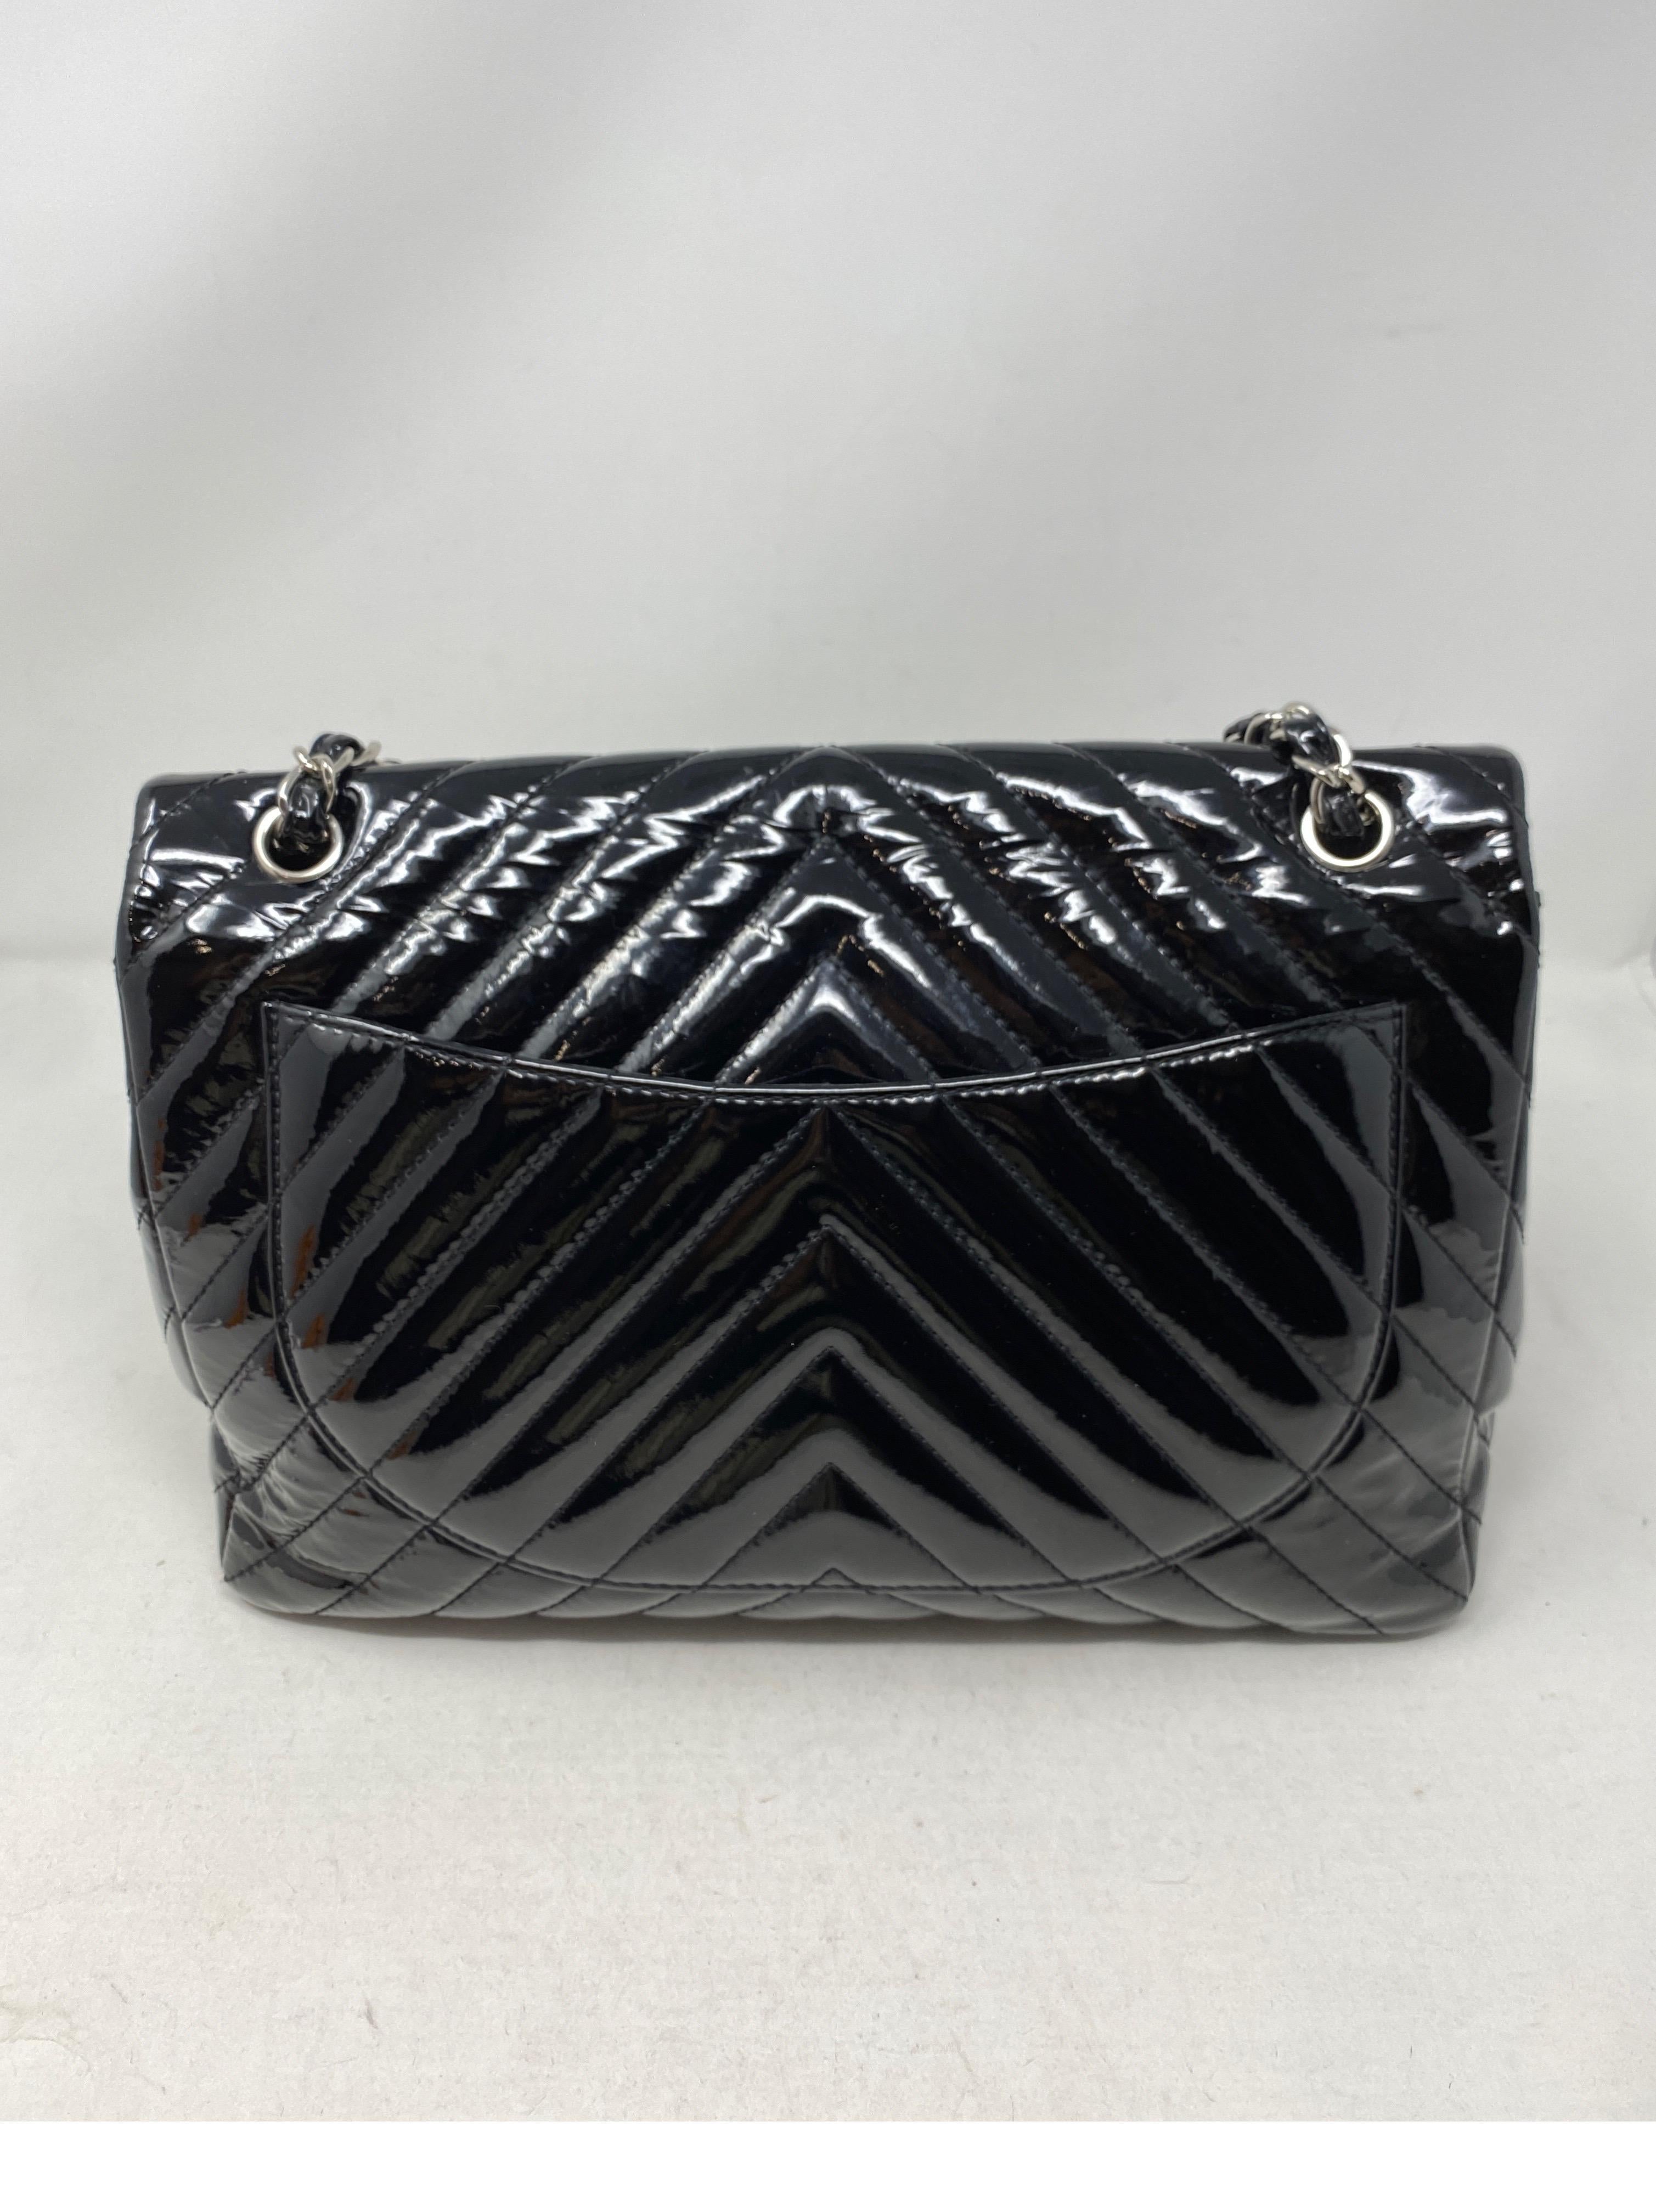 Chanel Black Jumbo Patent Leather Bag 3